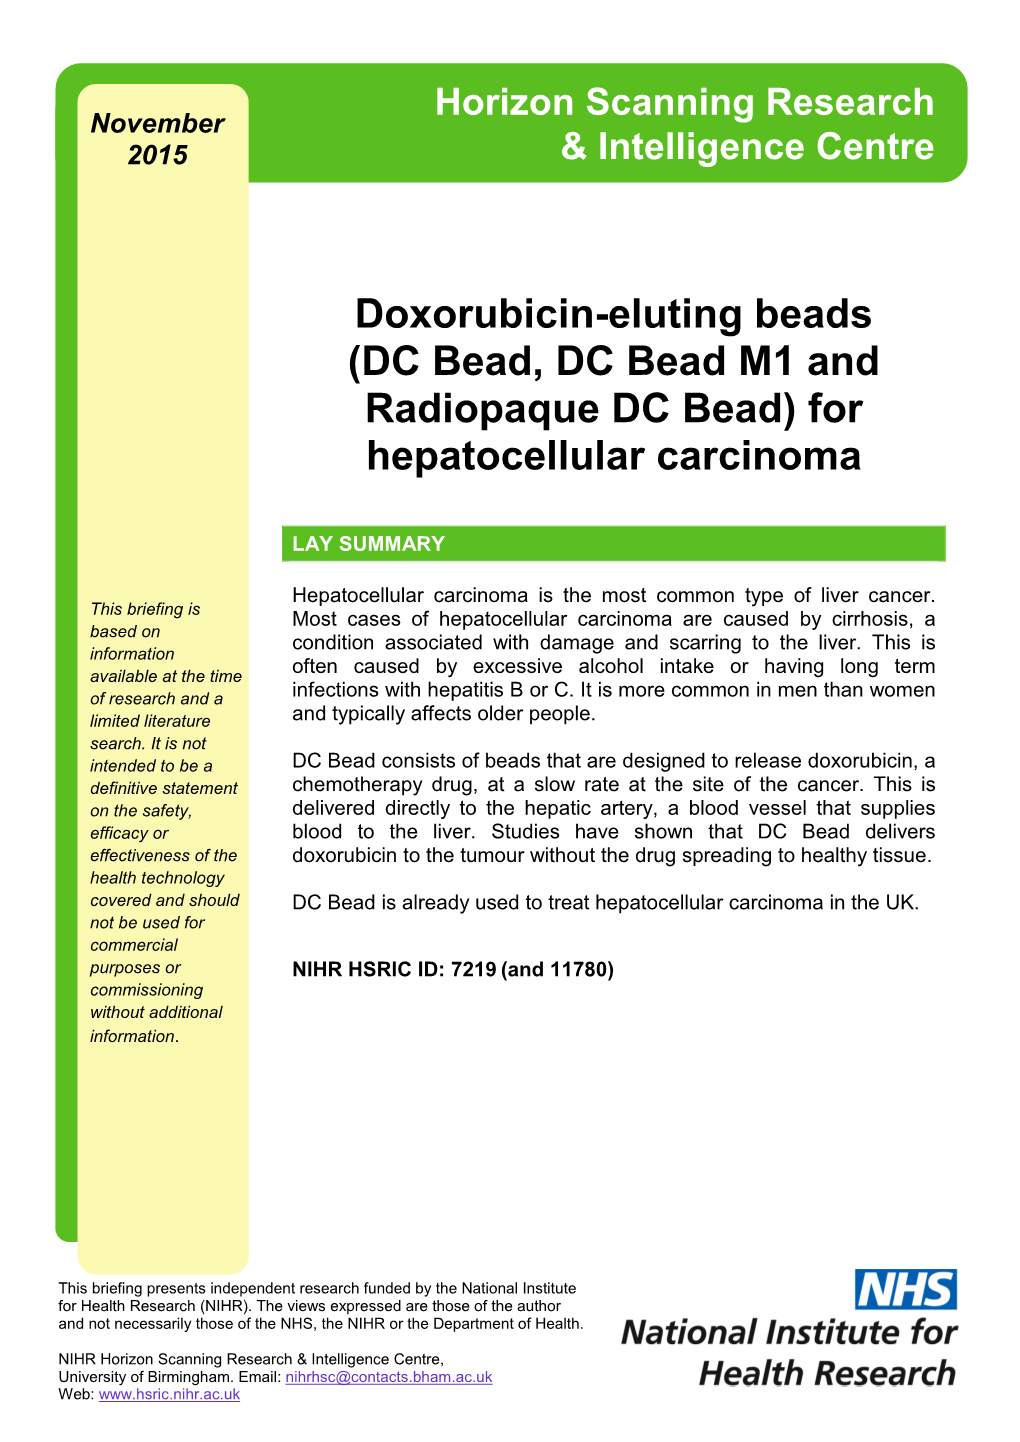 Doxorubicin-Eluting Beads (DC Bead, DC Bead M1 and Radiopaque DC Bead) for Hepatocellular Carcinoma